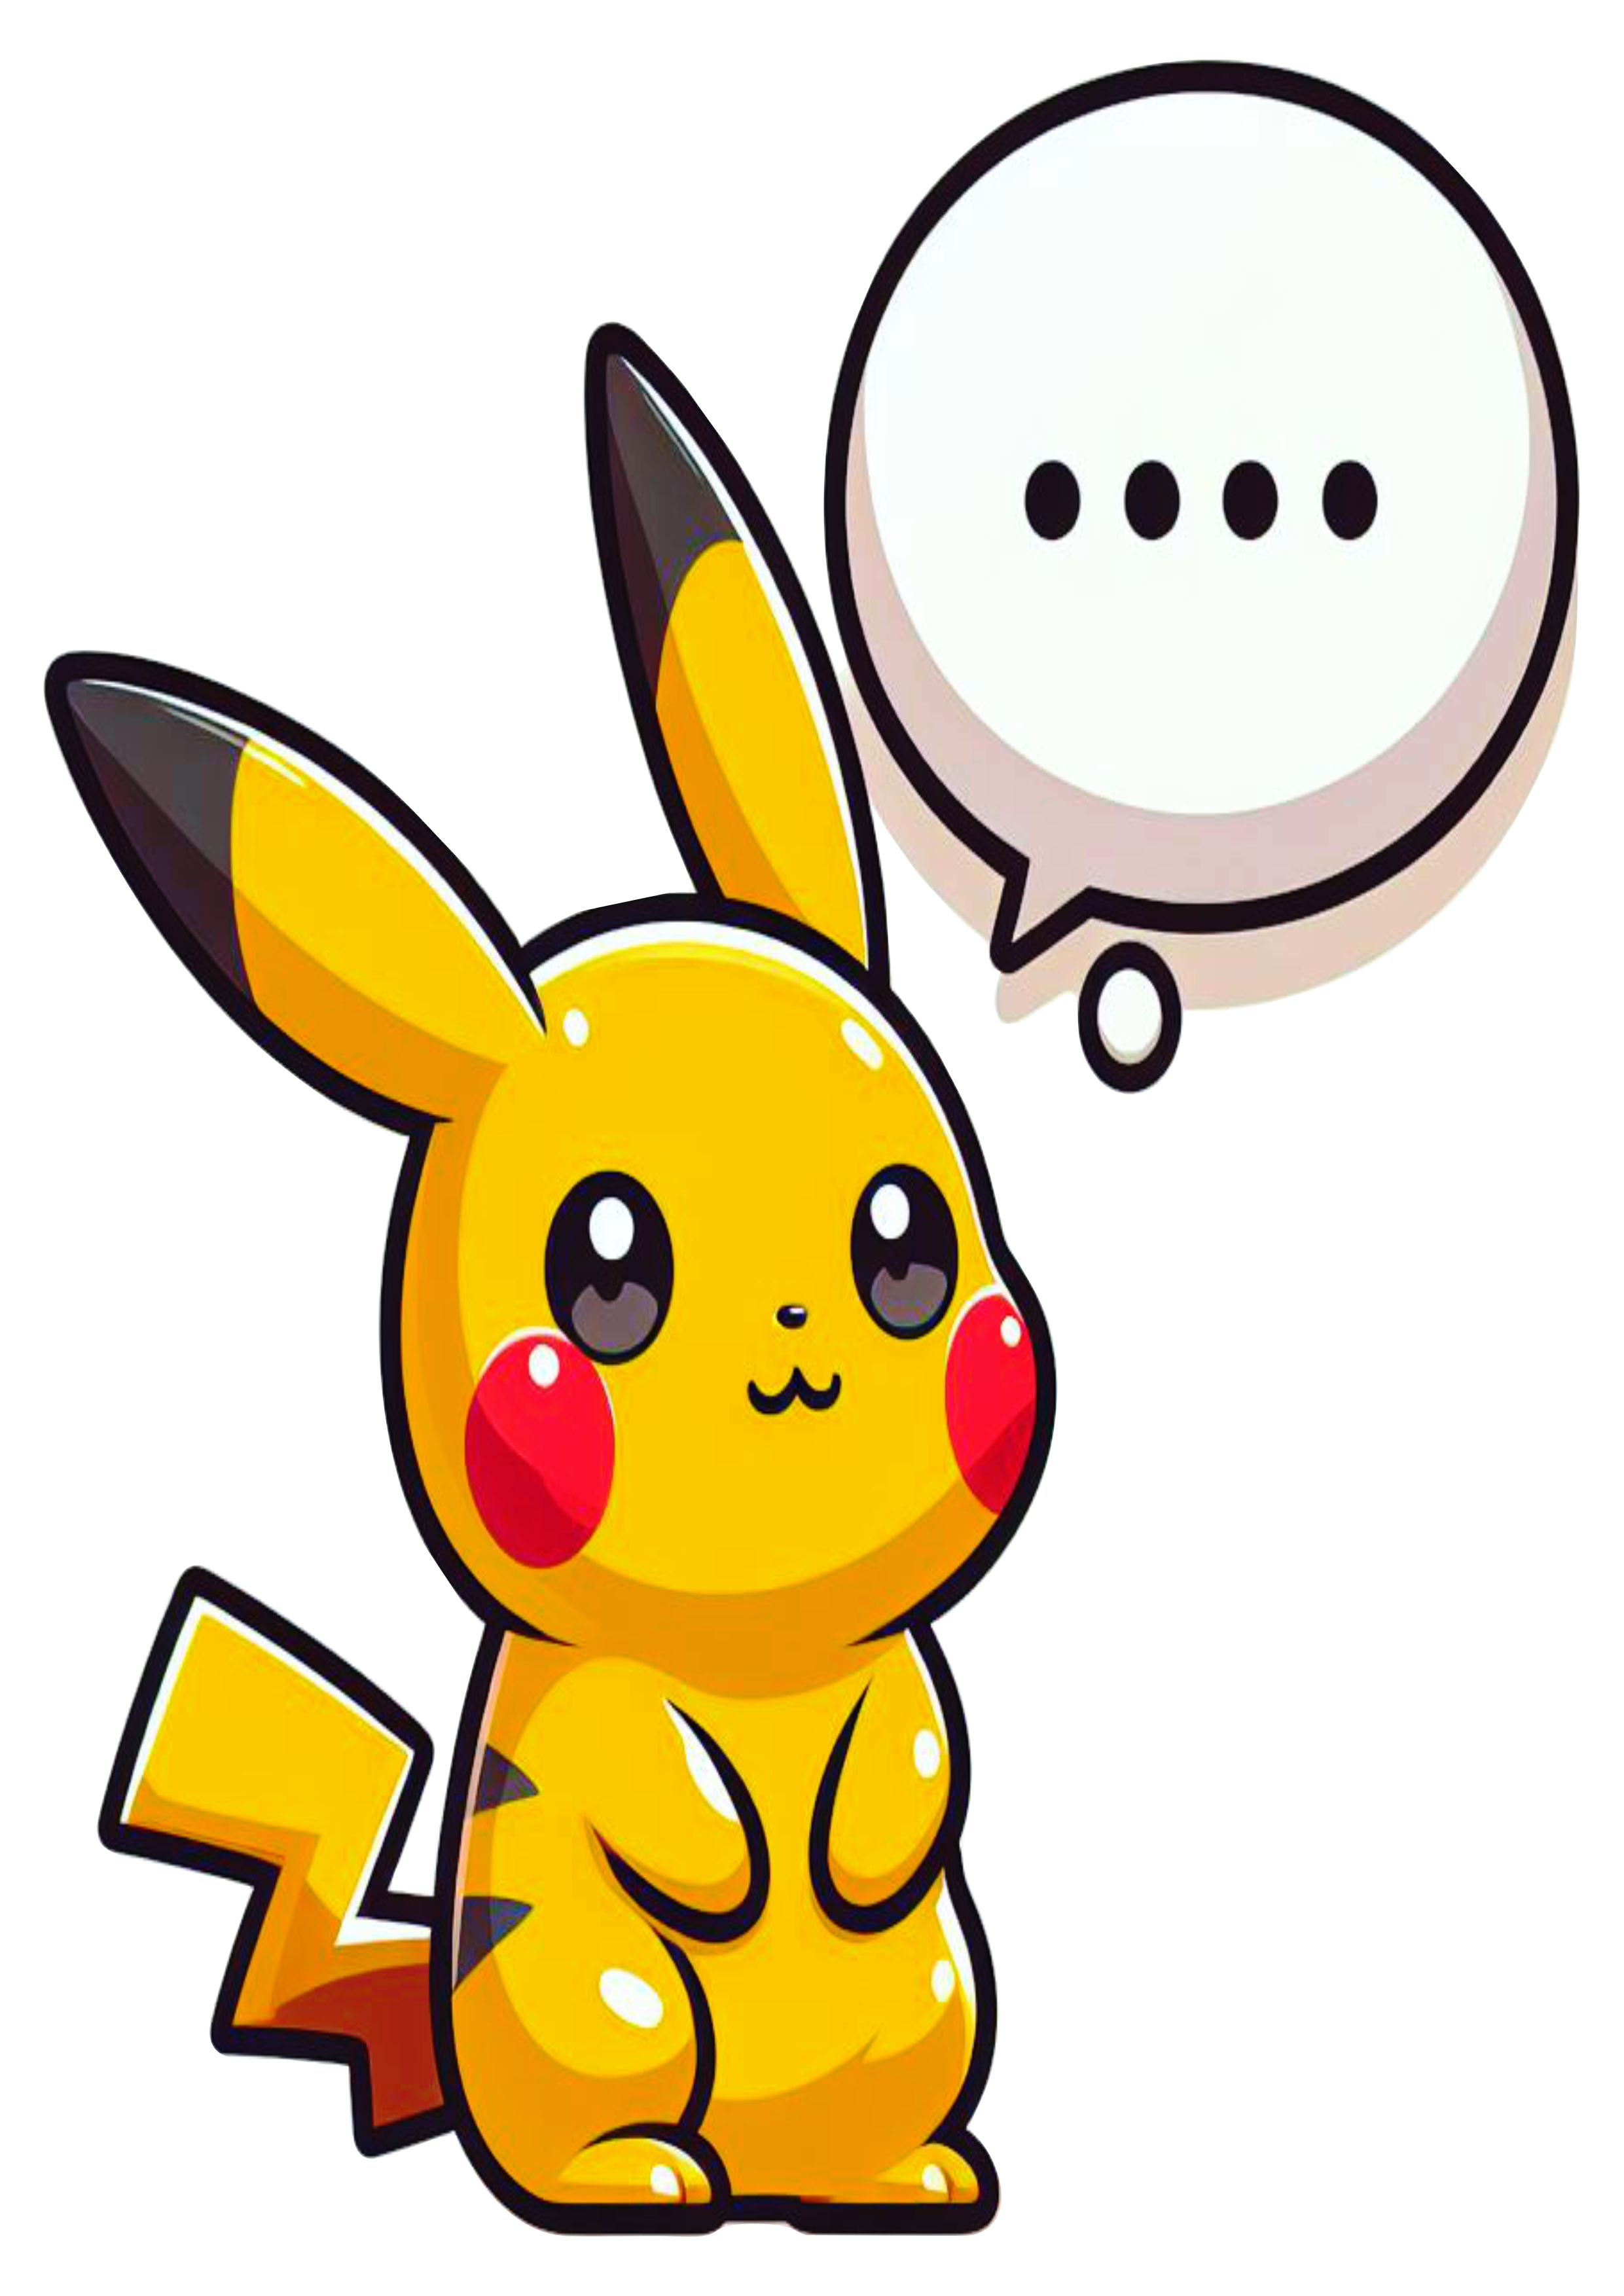 Pokémon png Pikachu anime transparent background colorful drawing clipart vector illustration